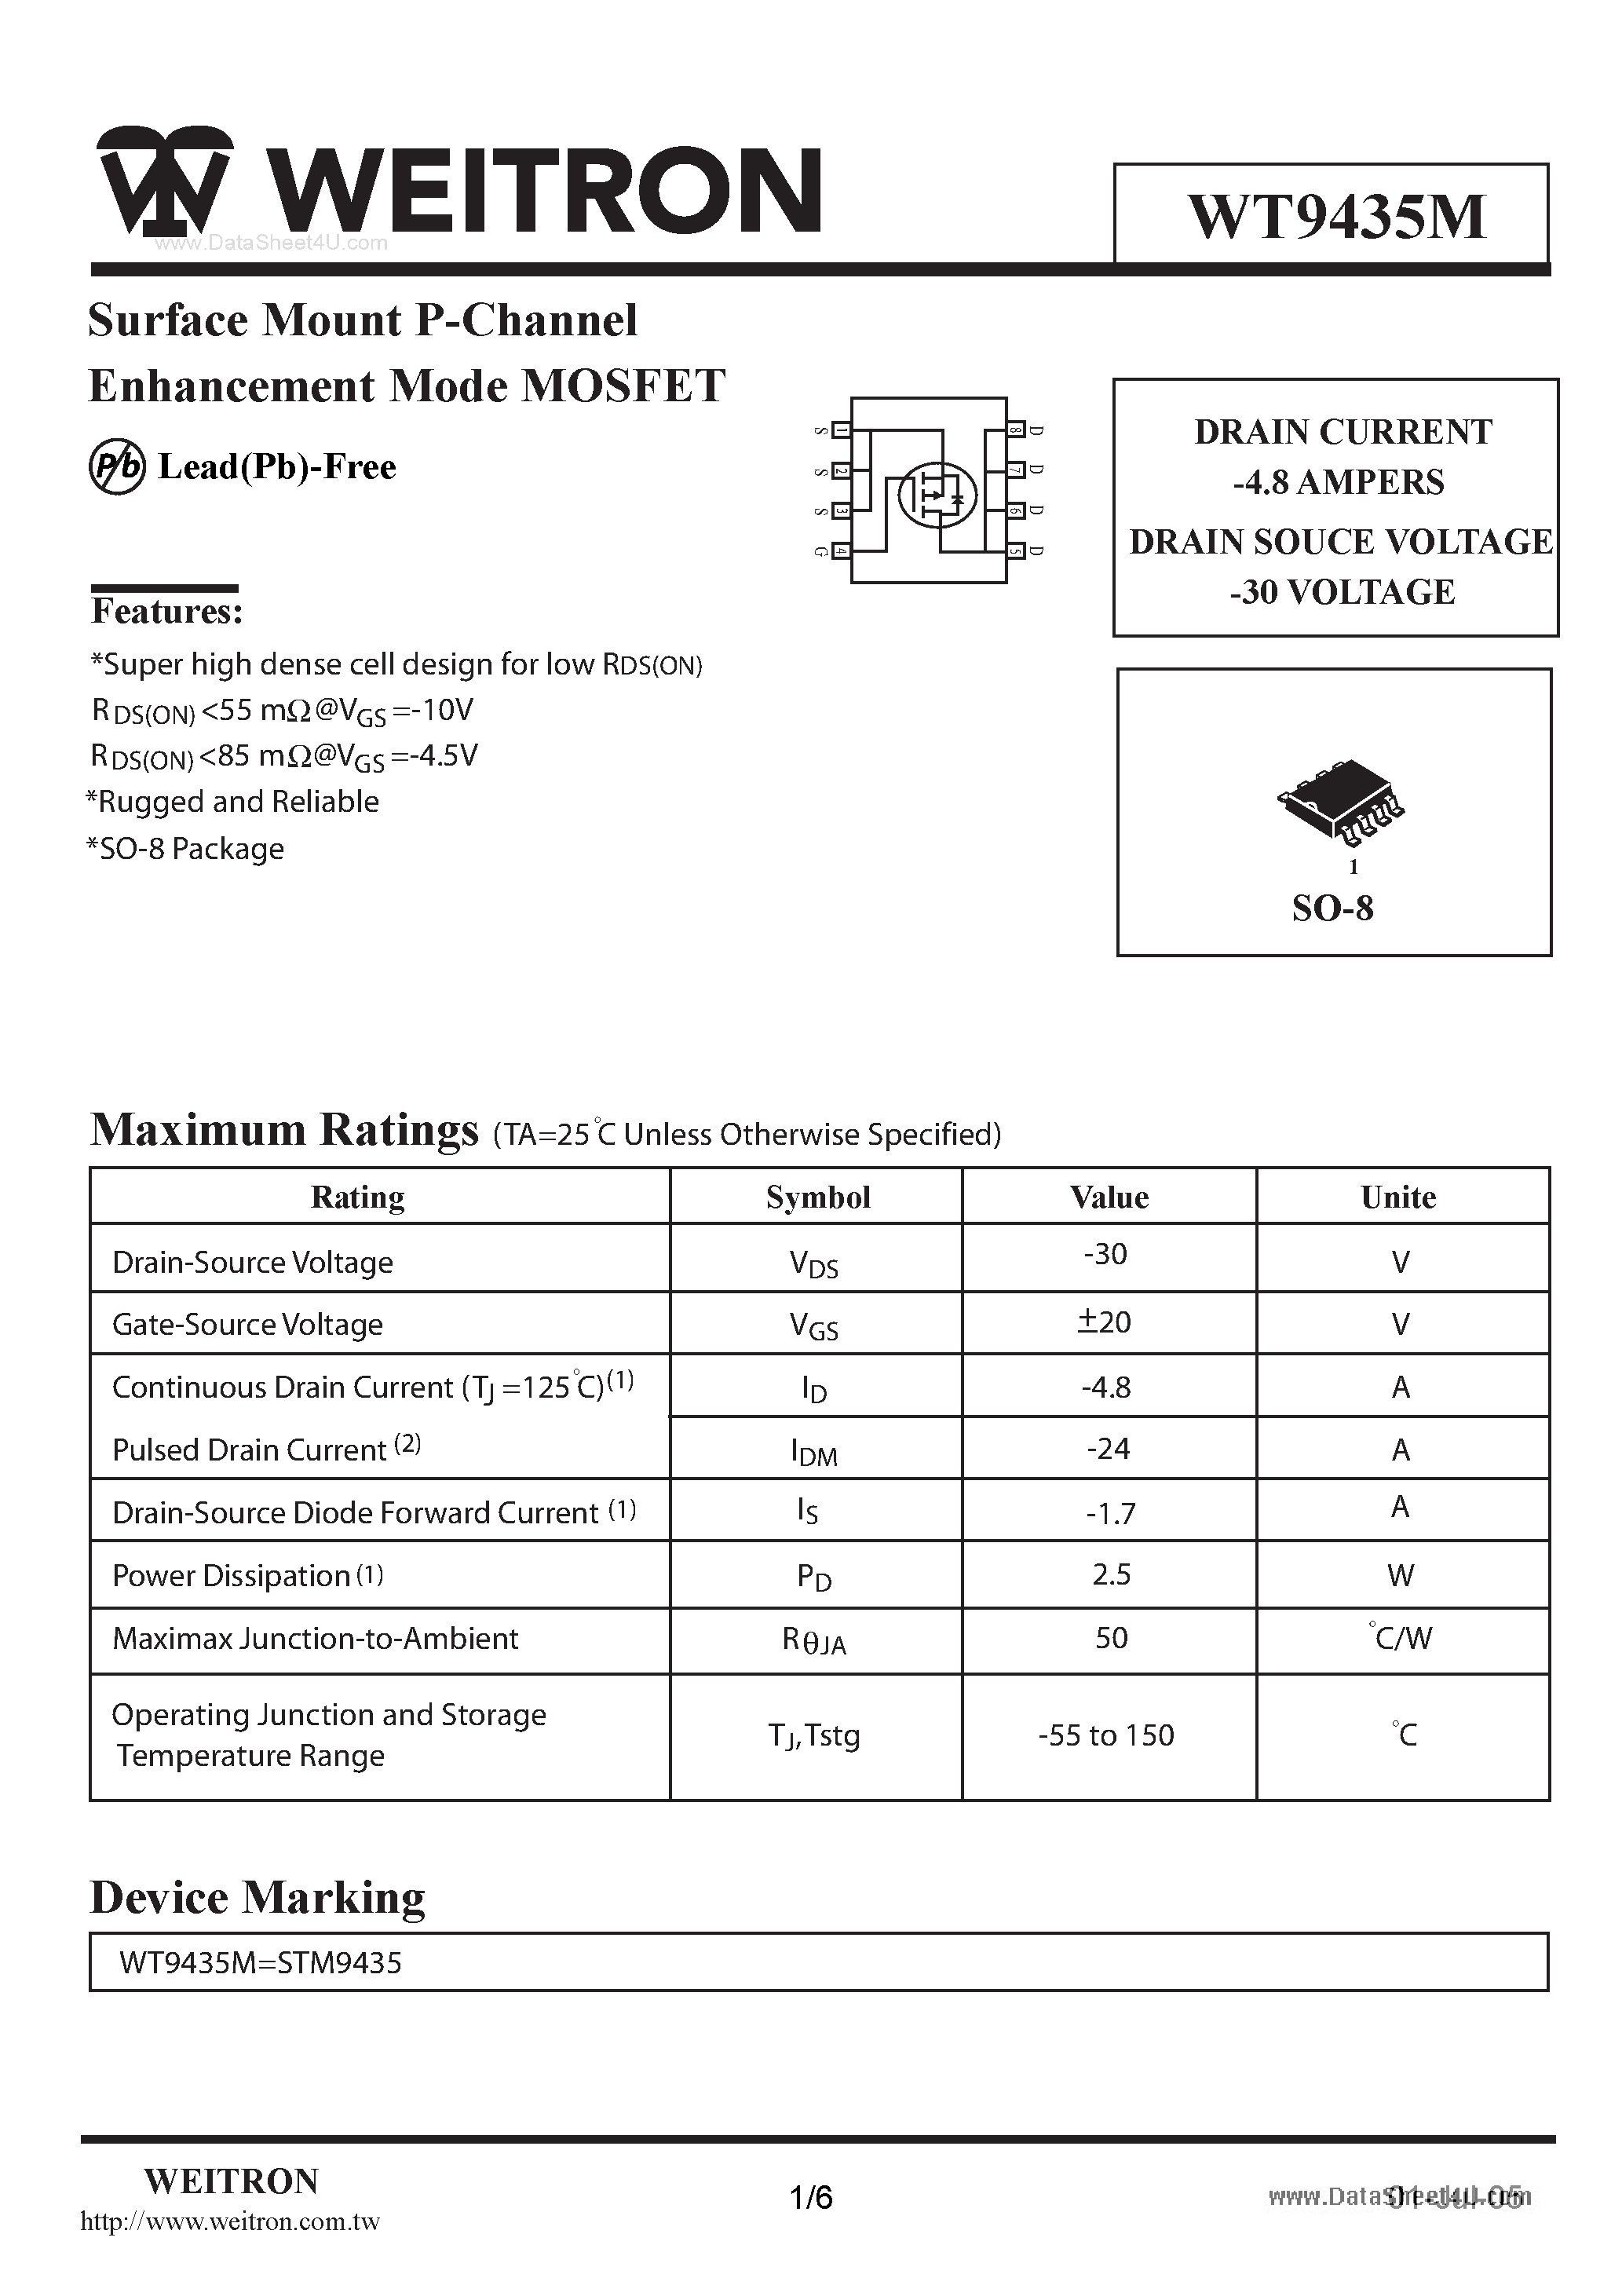 Даташит WT9435M - Surface Mount P-Channel Enhancement Mode MOSFET страница 1